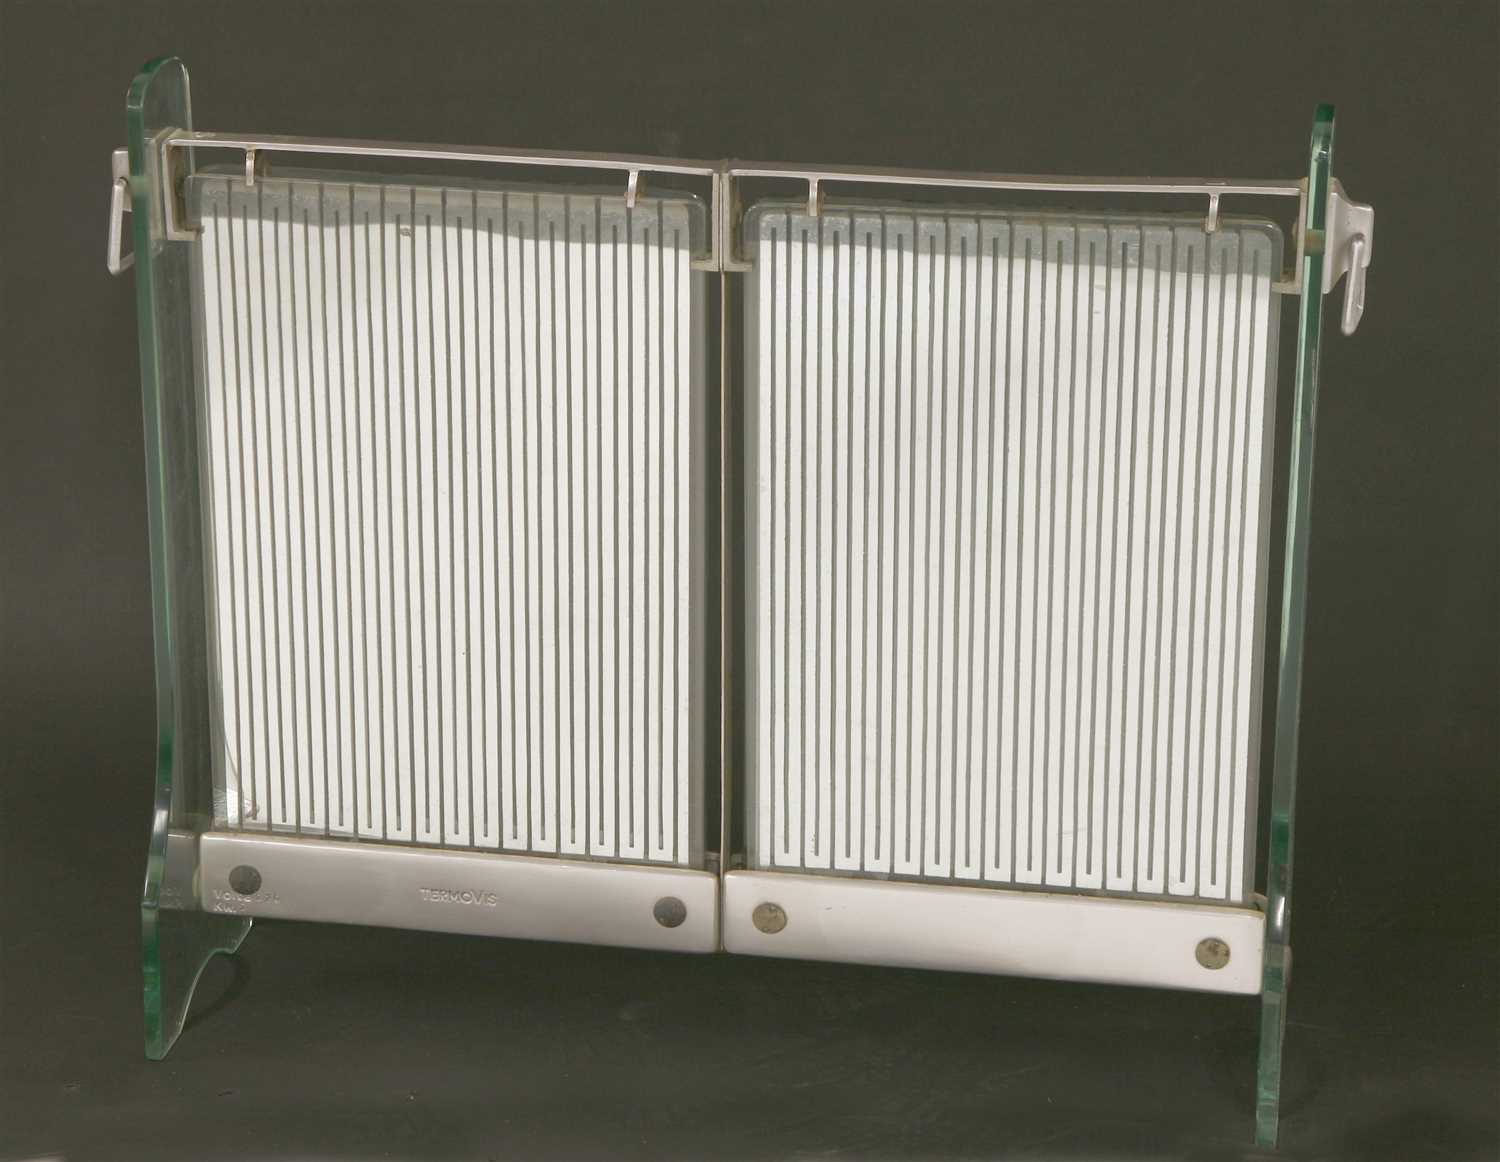 Lot 75 - A Termovis Radiant heater